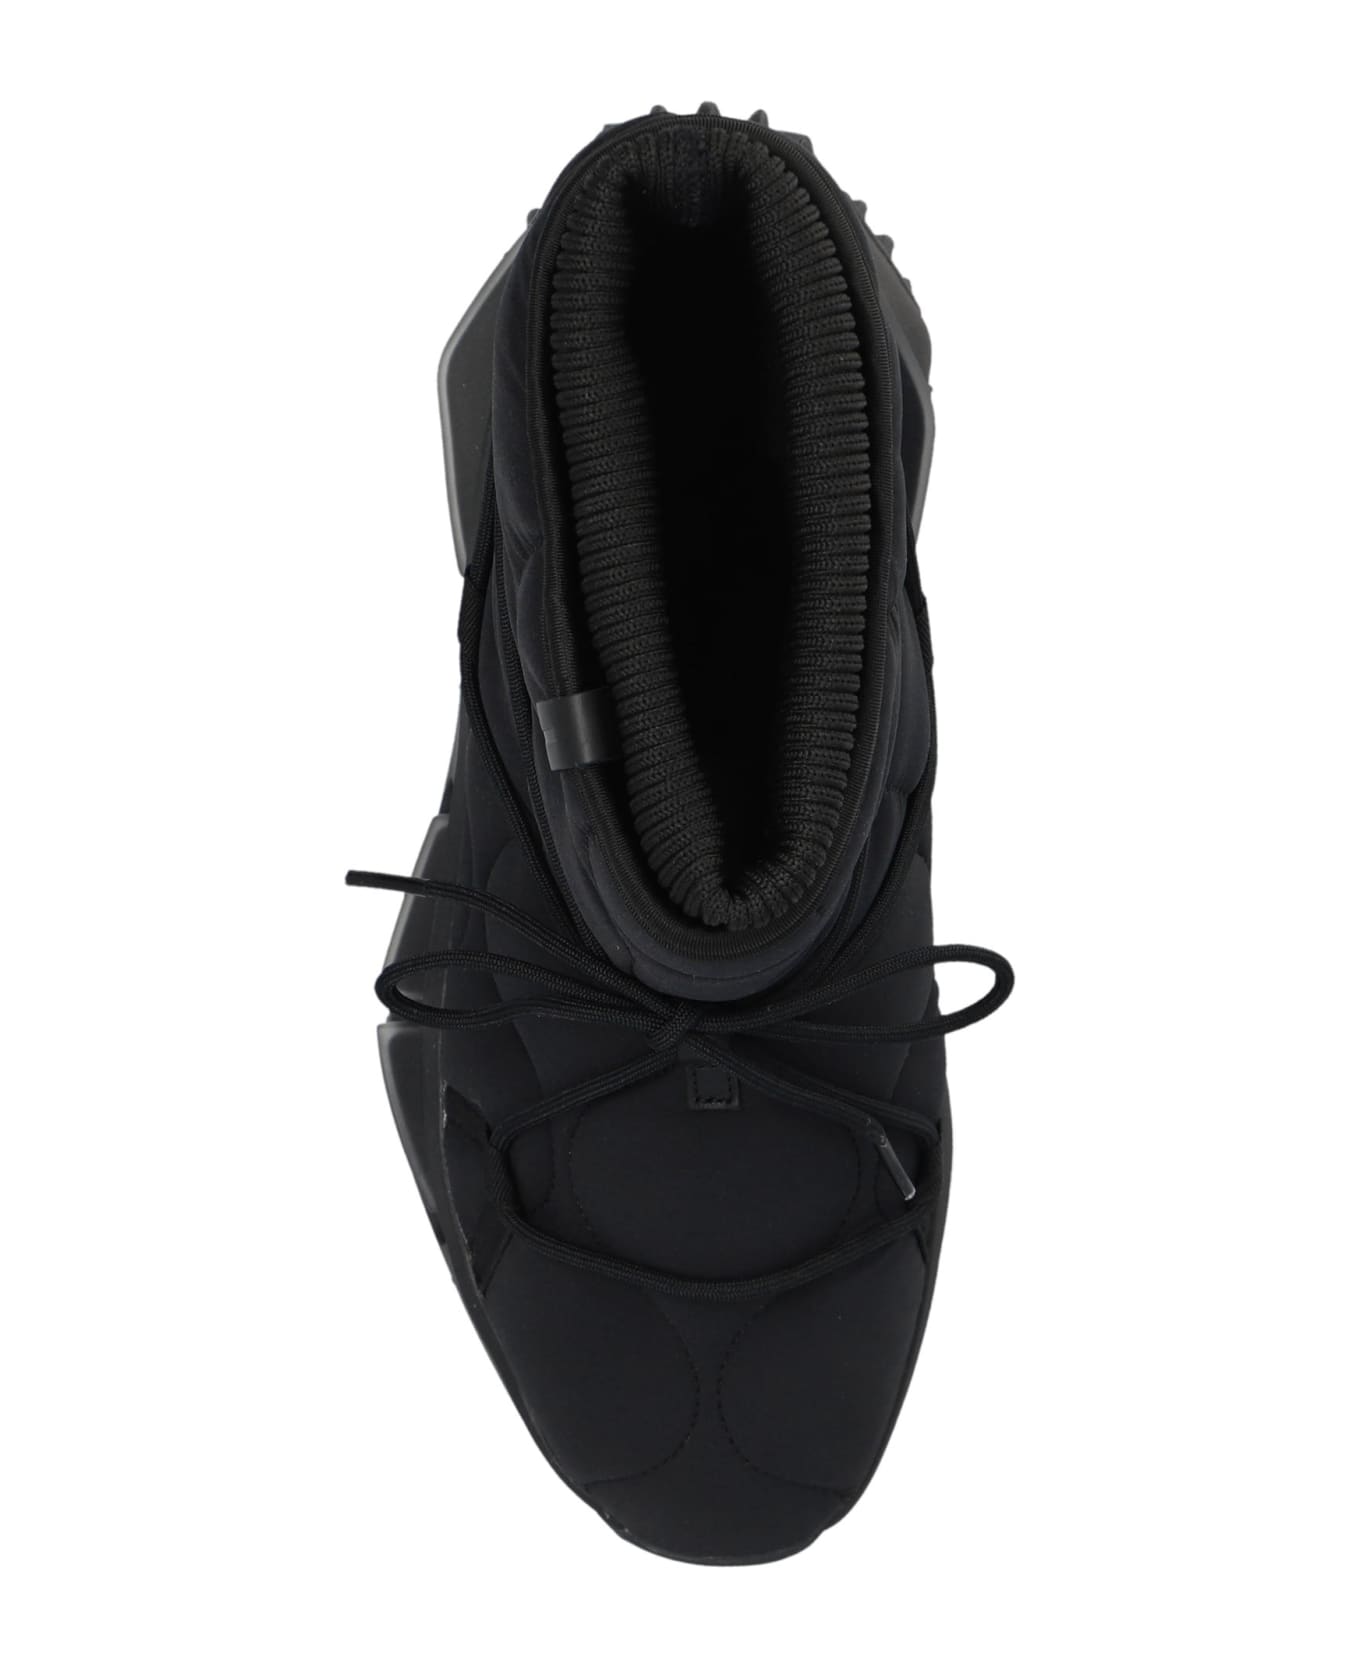 Adidas Originals 'nmd S1' Snow Boots - Black